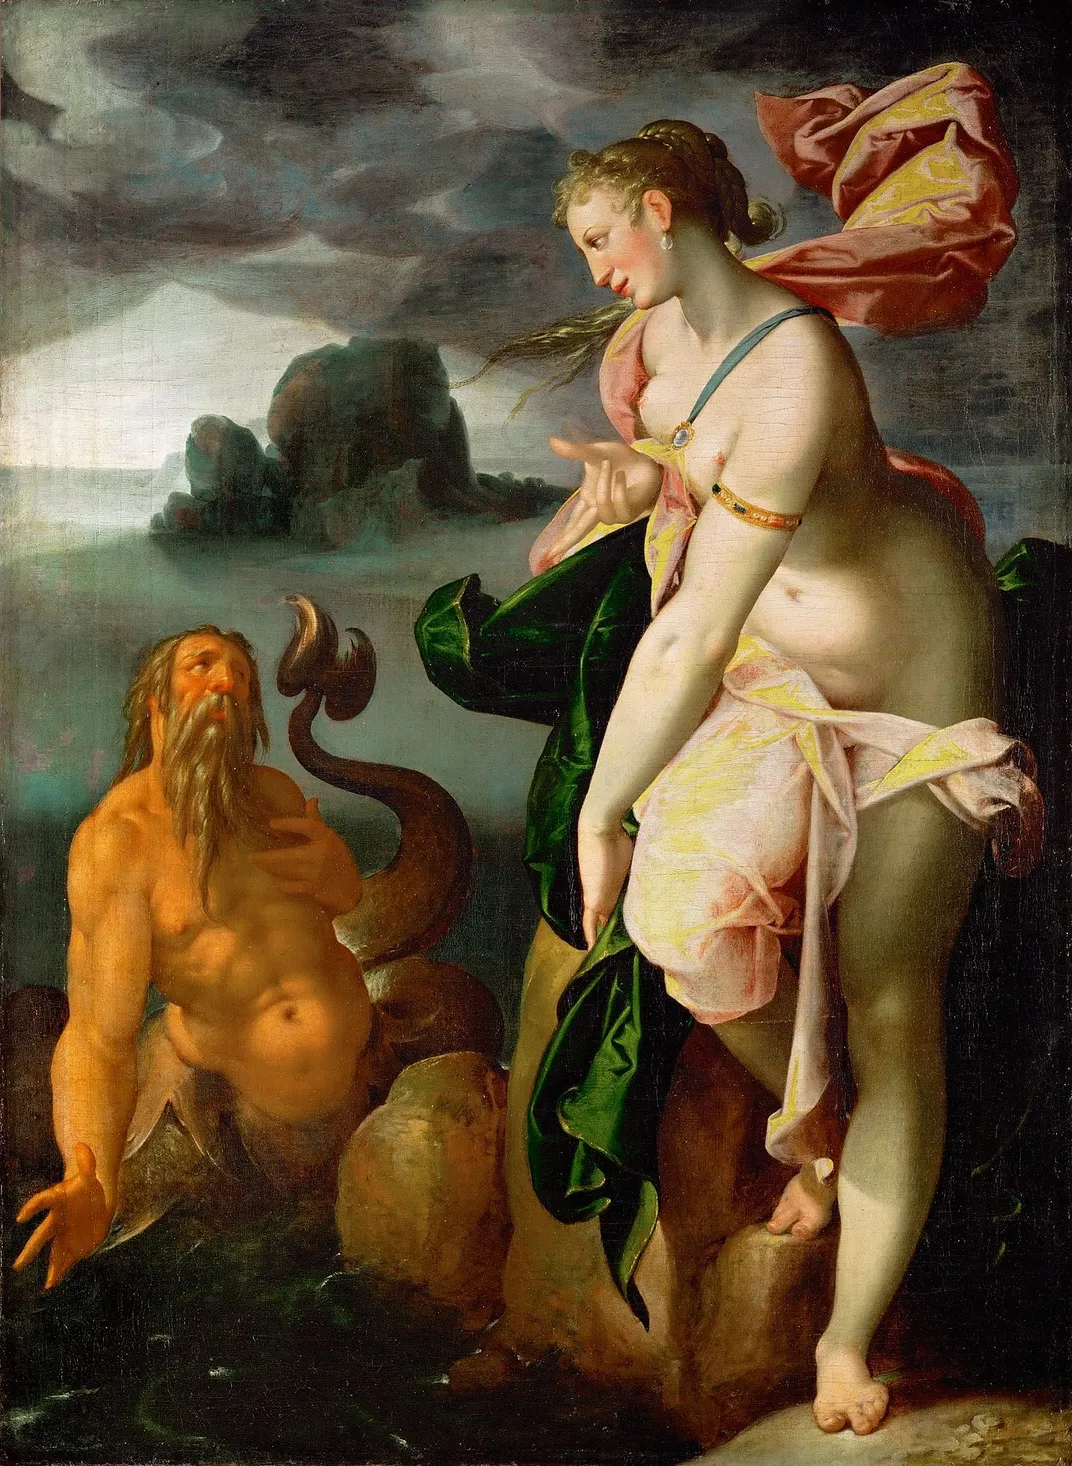 Bartholomeus Spranger's 1581 painting of Glaucus and Scylla